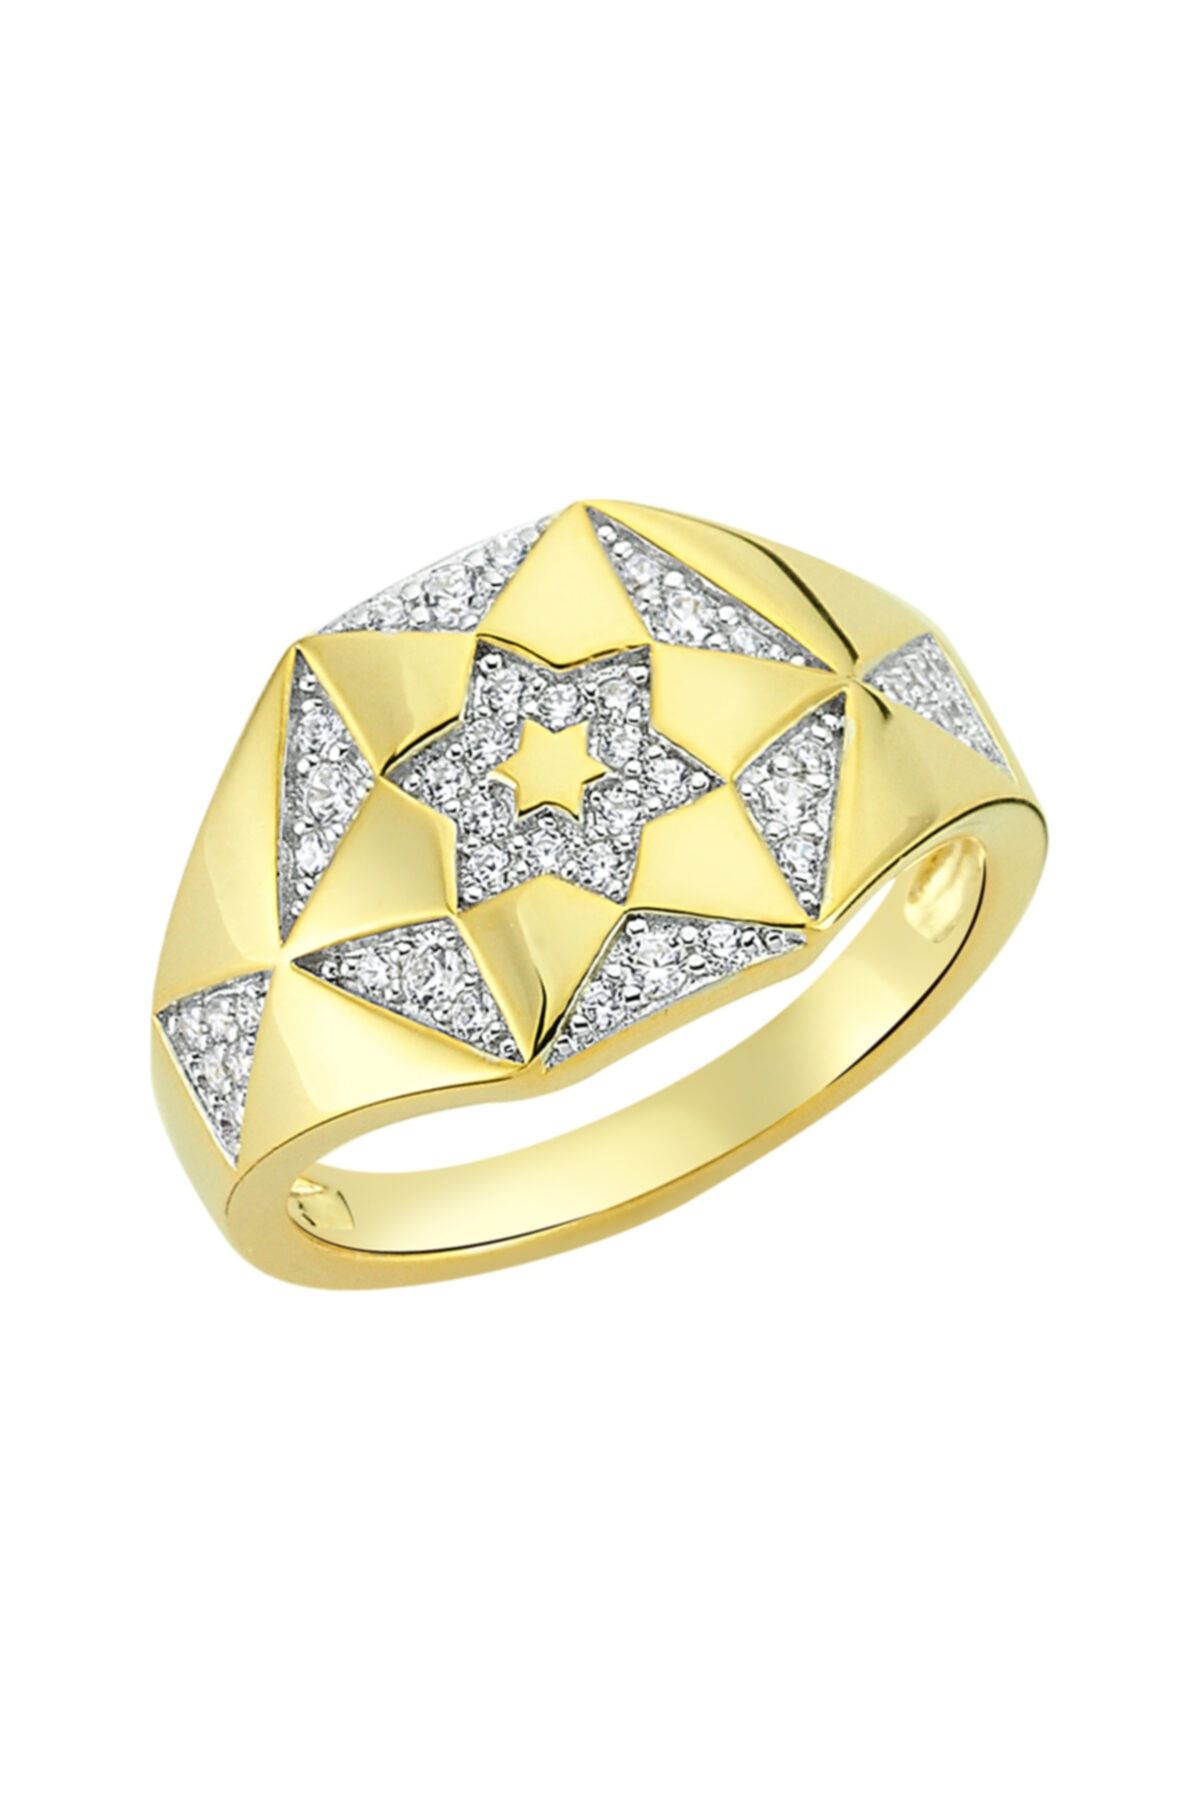 Luzdemia Chiron Star Ring 925 - Gold/white